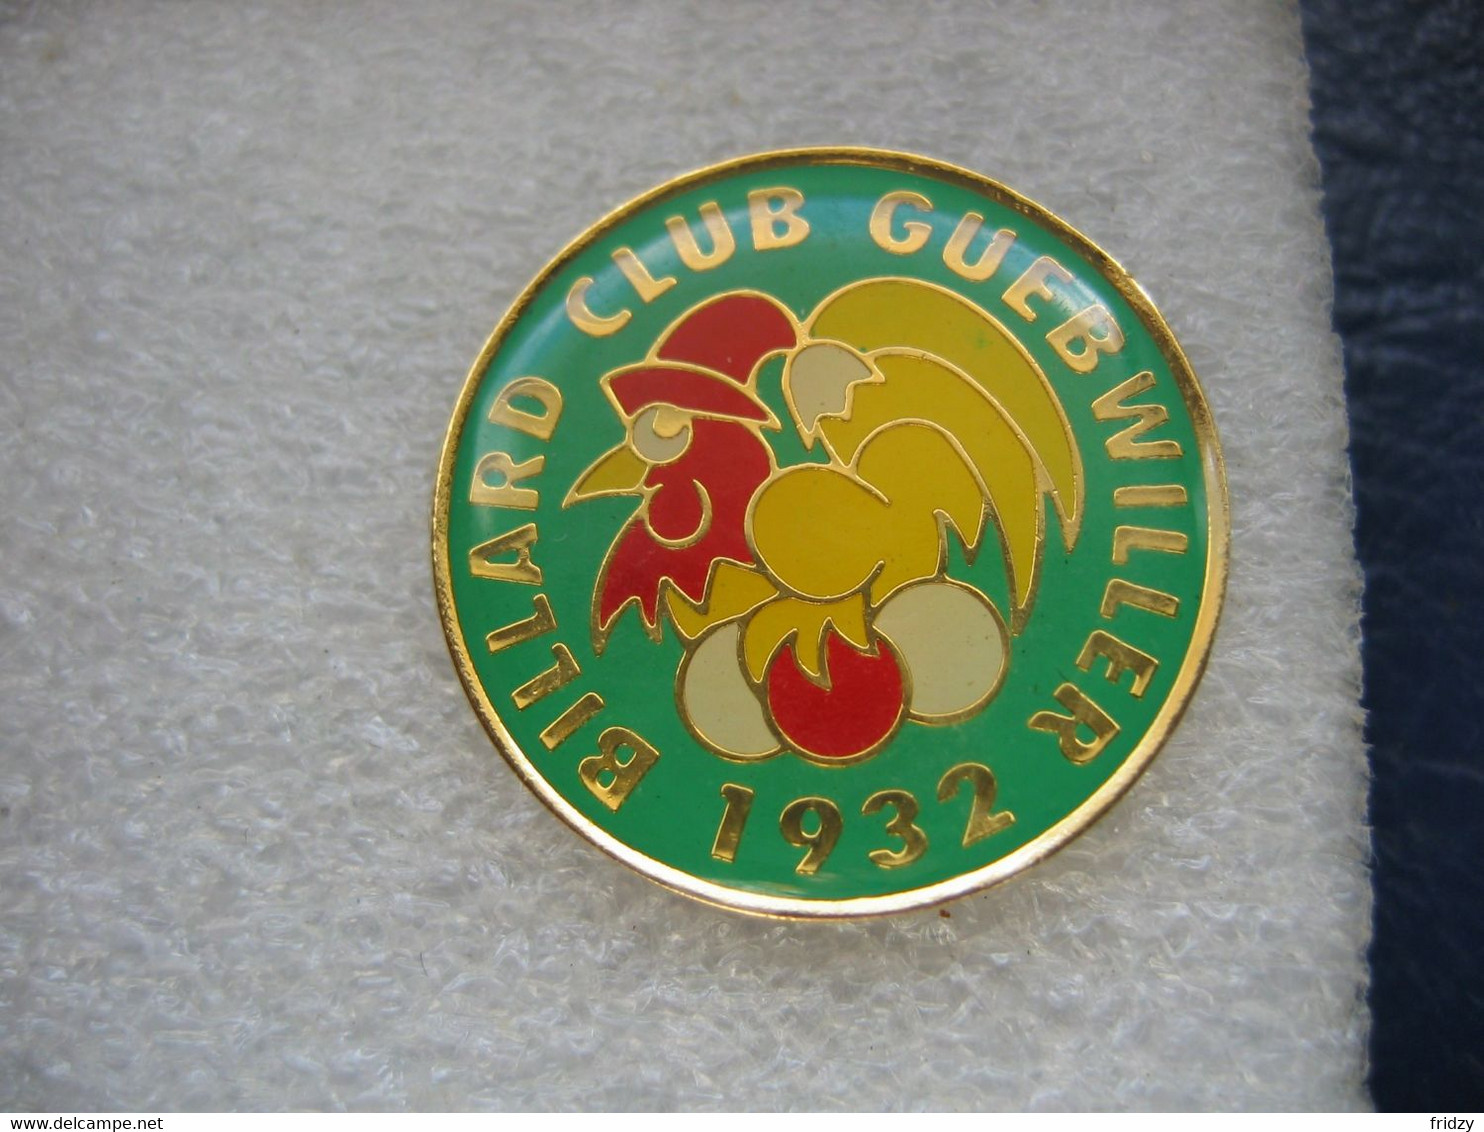 Pin's Du Billard Club 1932 De GUEBWILLER - Billard